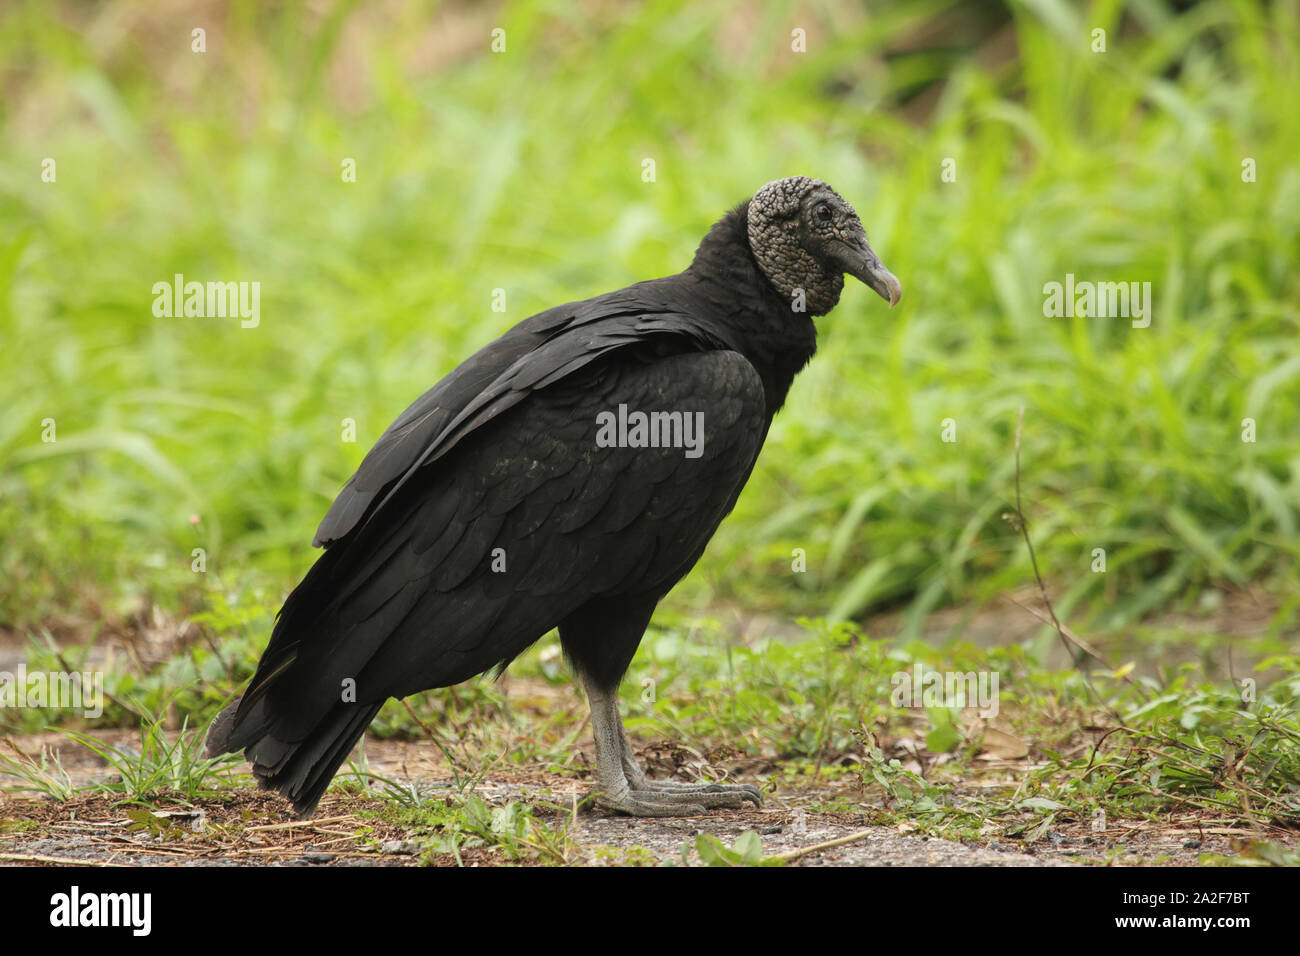 Scavenger bird Black vulture (Coragyps atratus) or American black vulture in the New World vulture family in flight Stock Photo